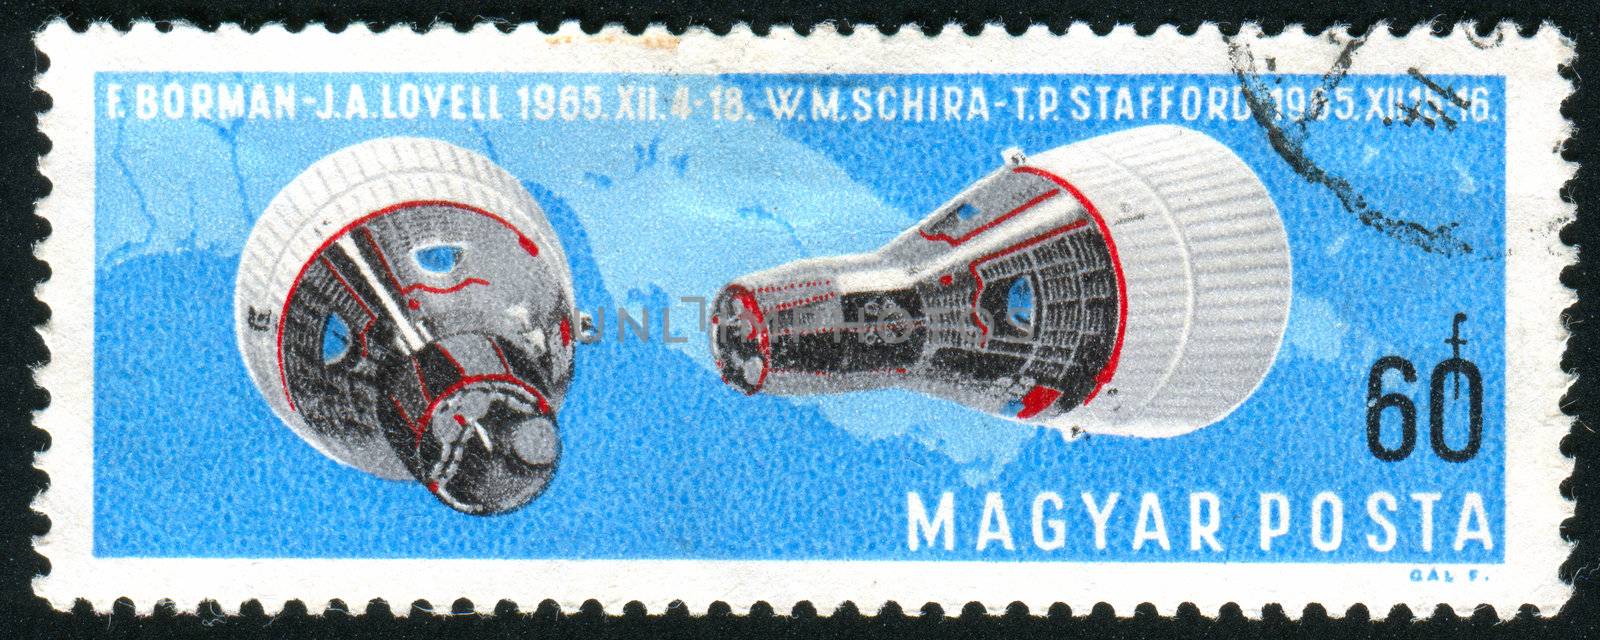 HUNGARY - CIRCA 1966: stamp printed by Hungary, shows Space Craft, circa 1966